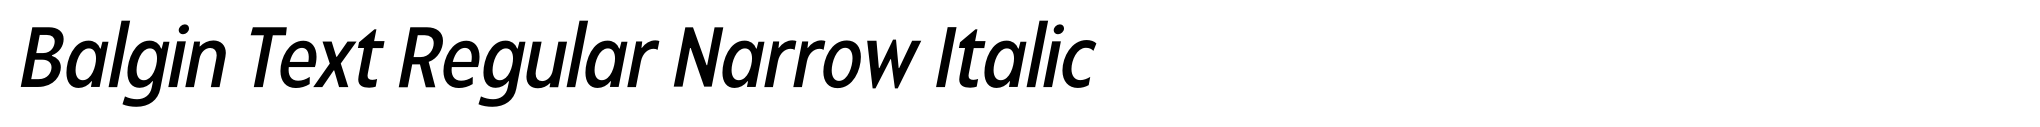 Balgin Text Regular Narrow Italic image